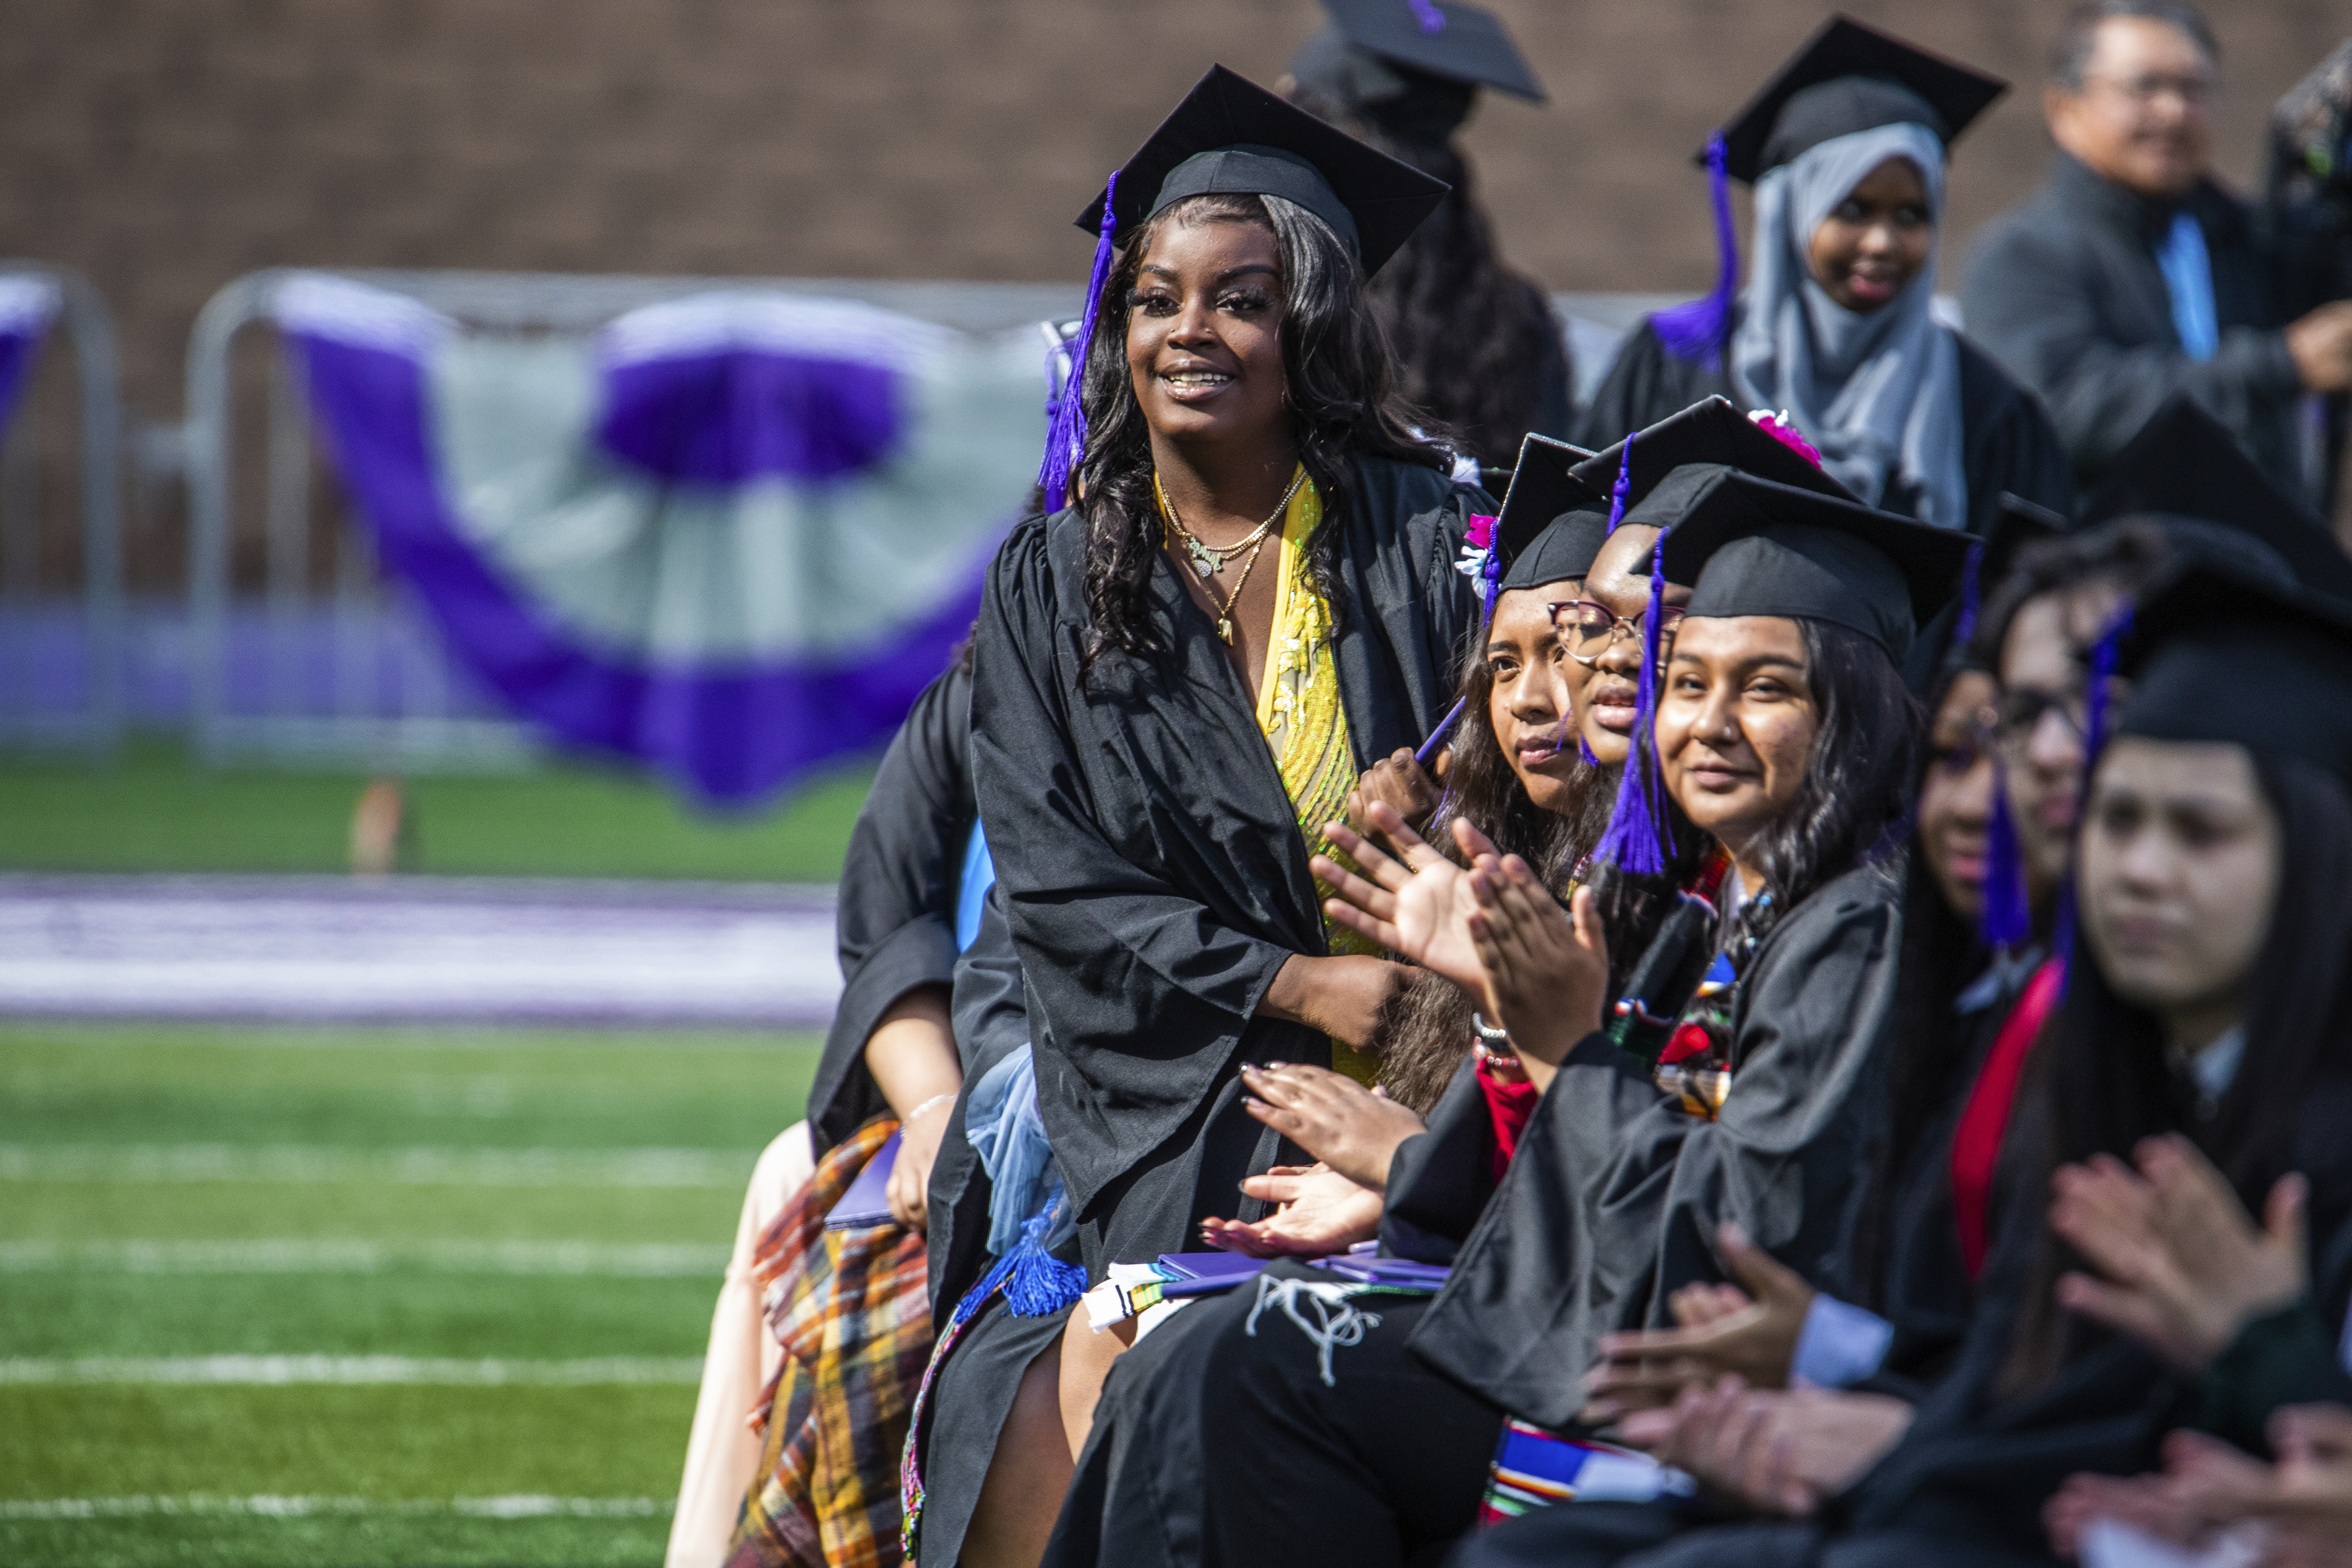 DFC students smiling at graduation